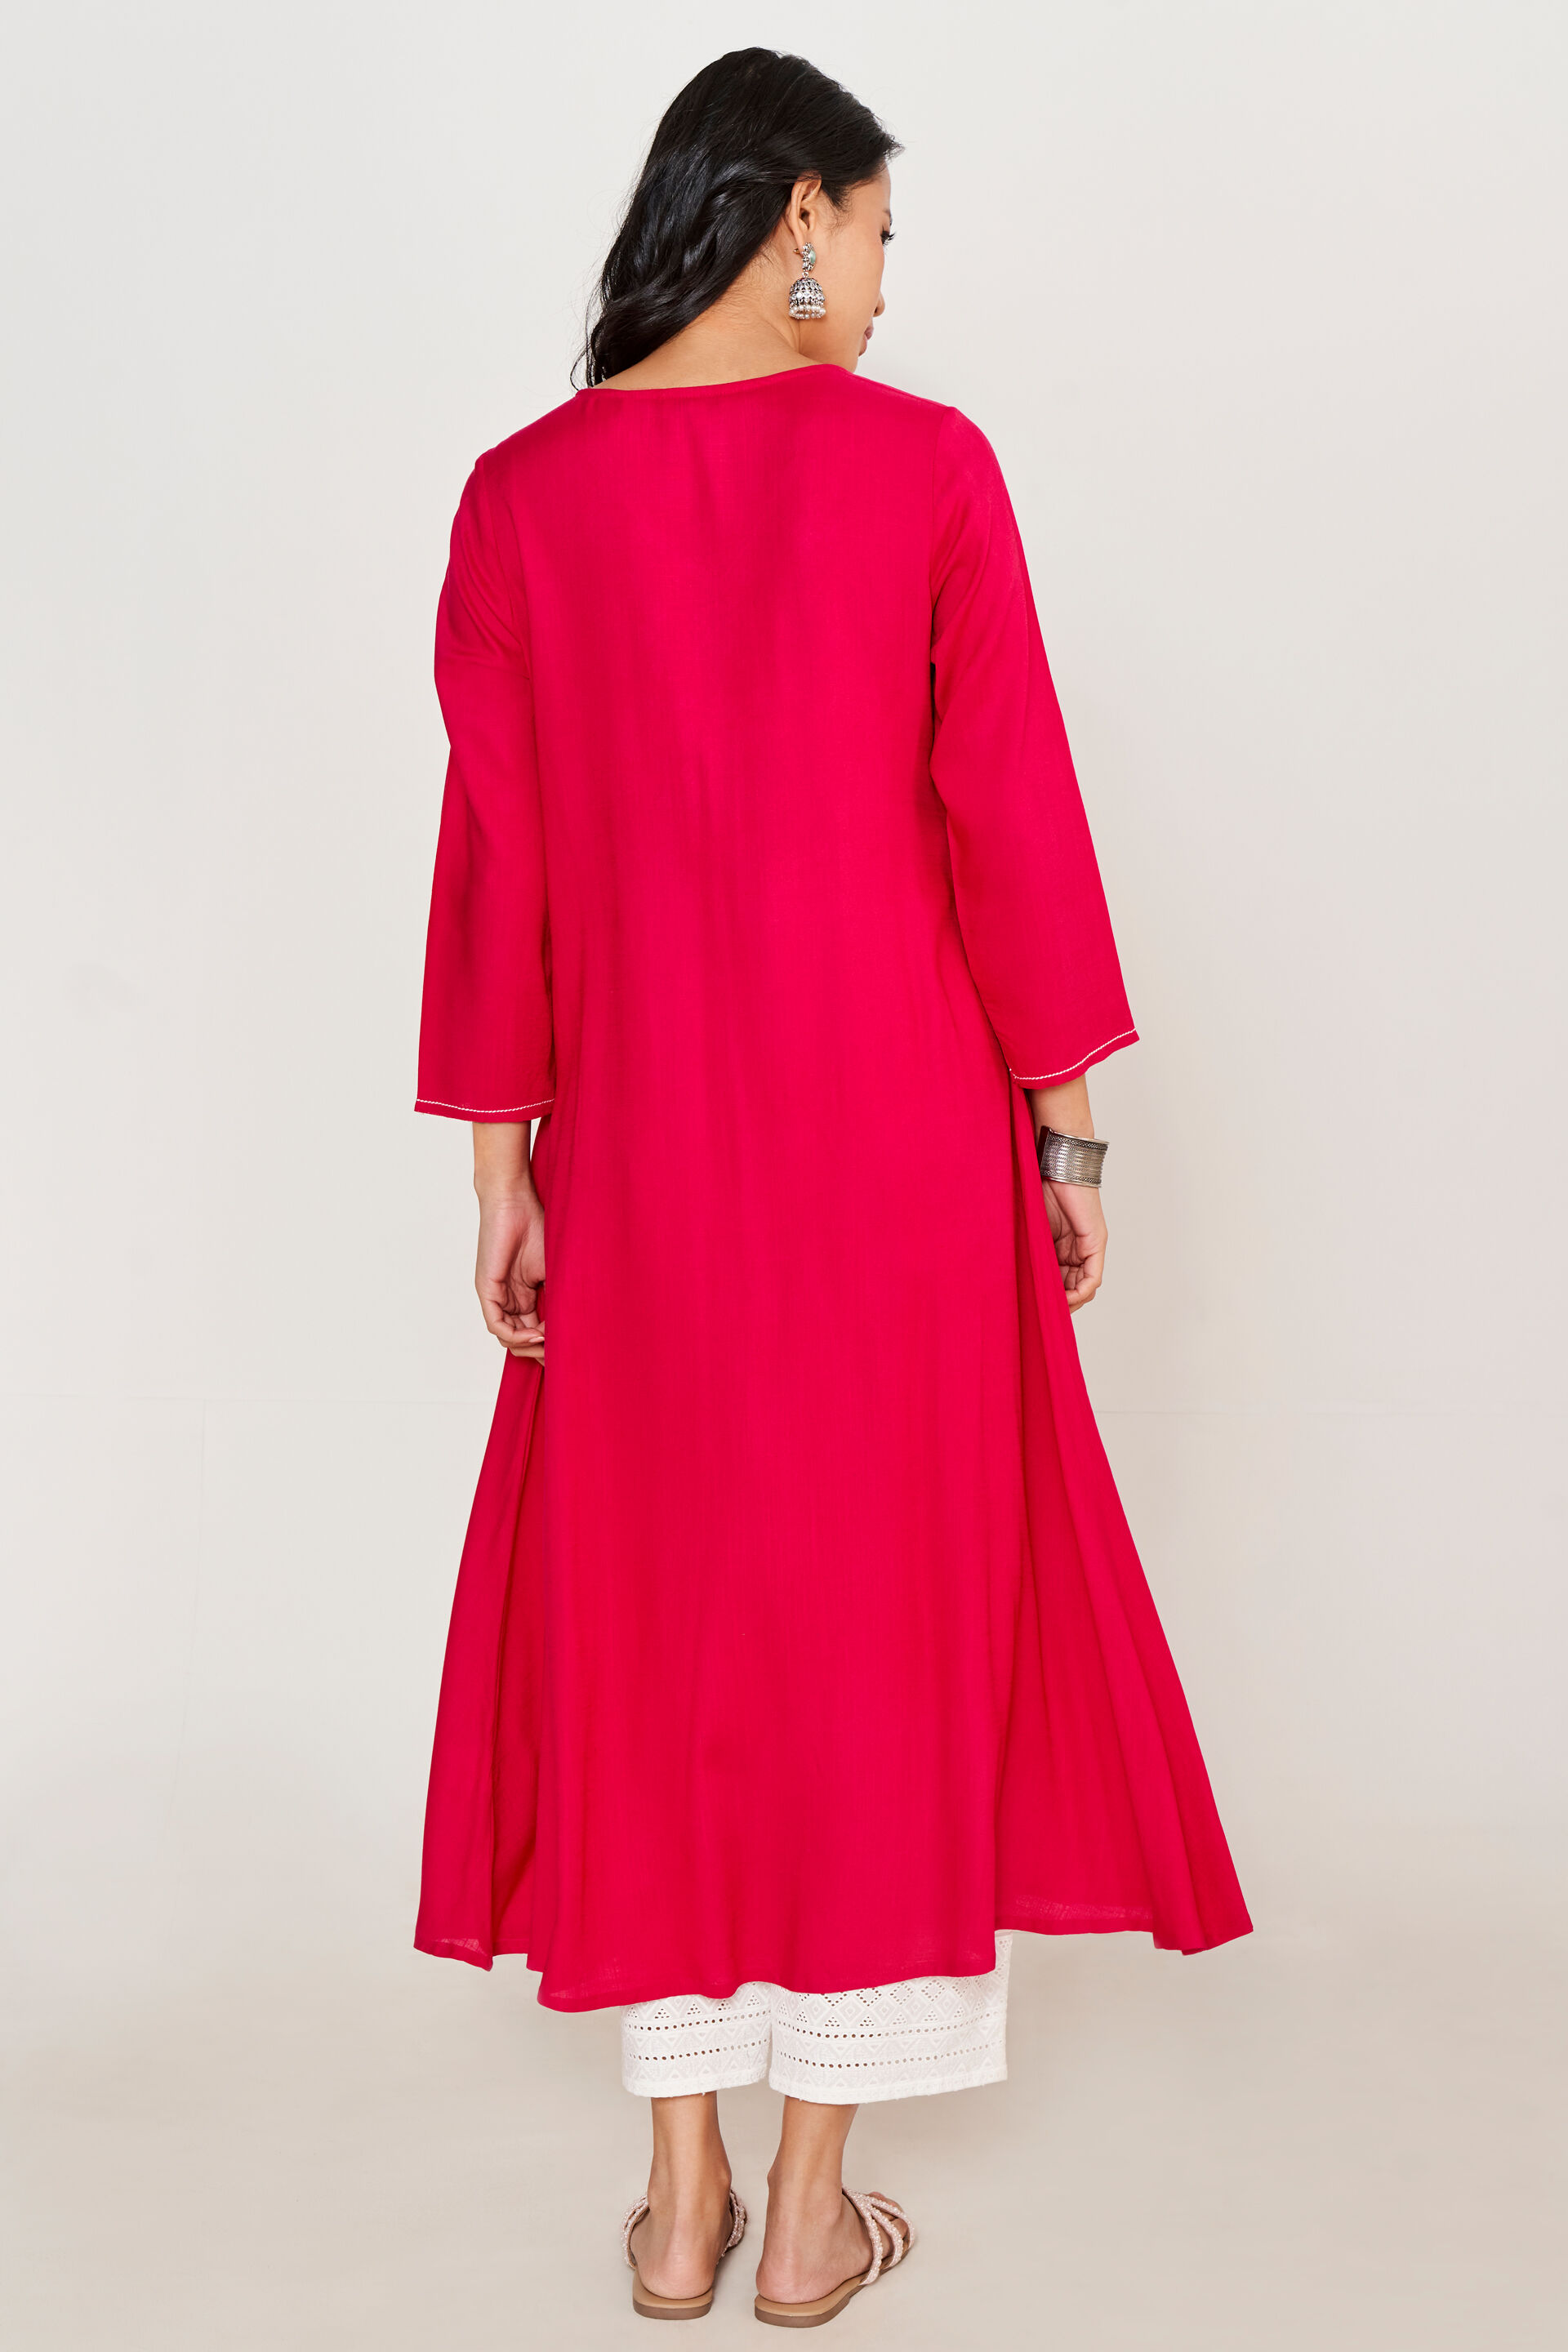 Buy Red Kurtas for Women by Global Desi Online | Ajio.com